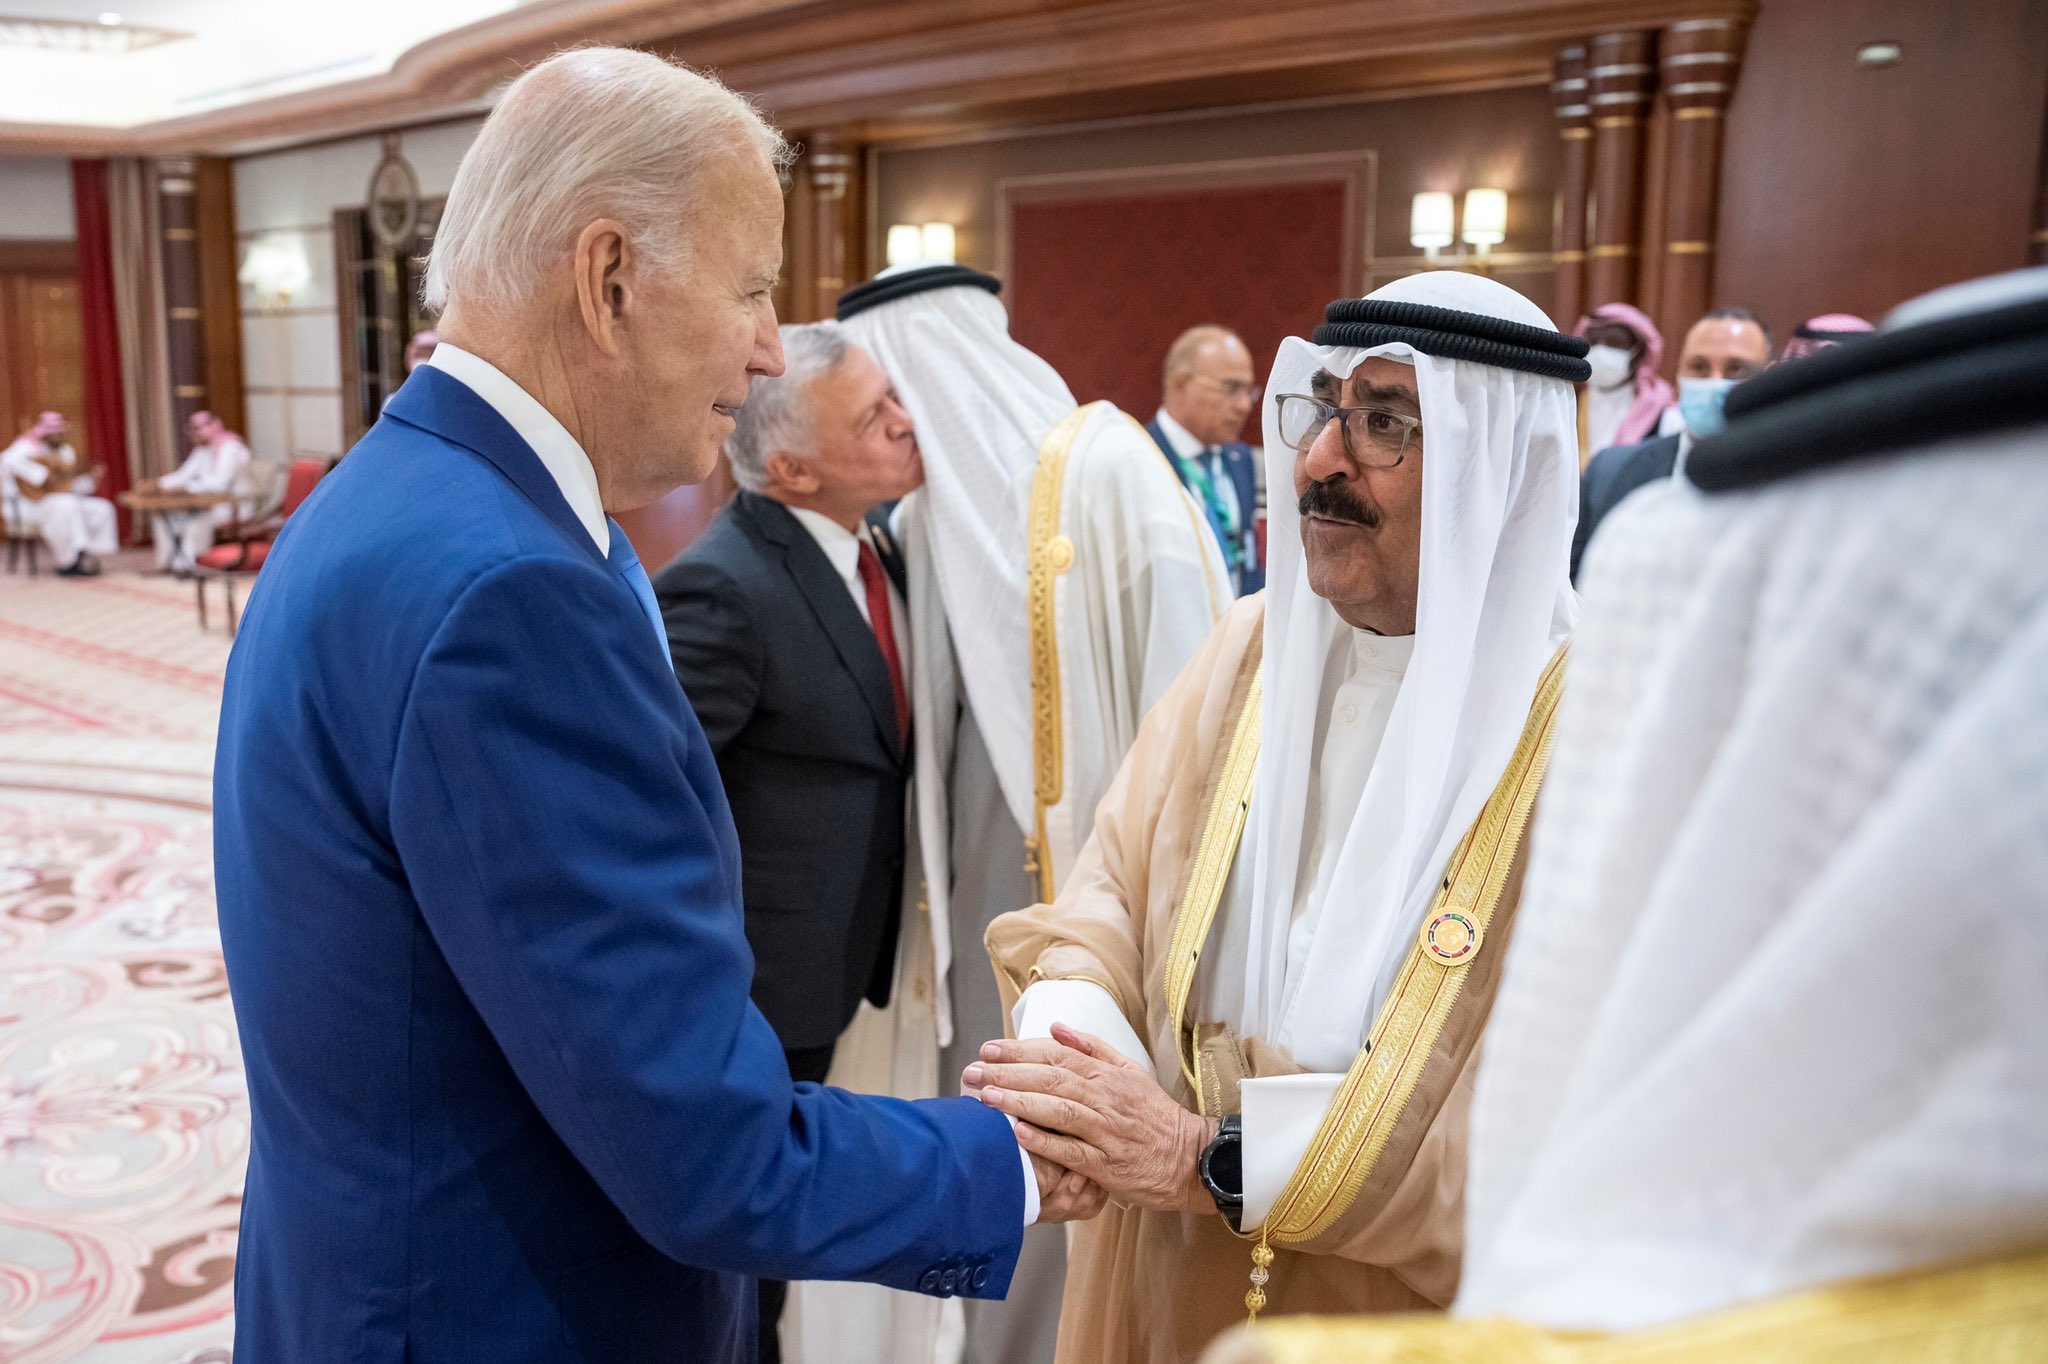 His Highness the Amir Sheikh Mishal Al-Ahmad Al-Jaber Al-Sabah with US President Joe Biden